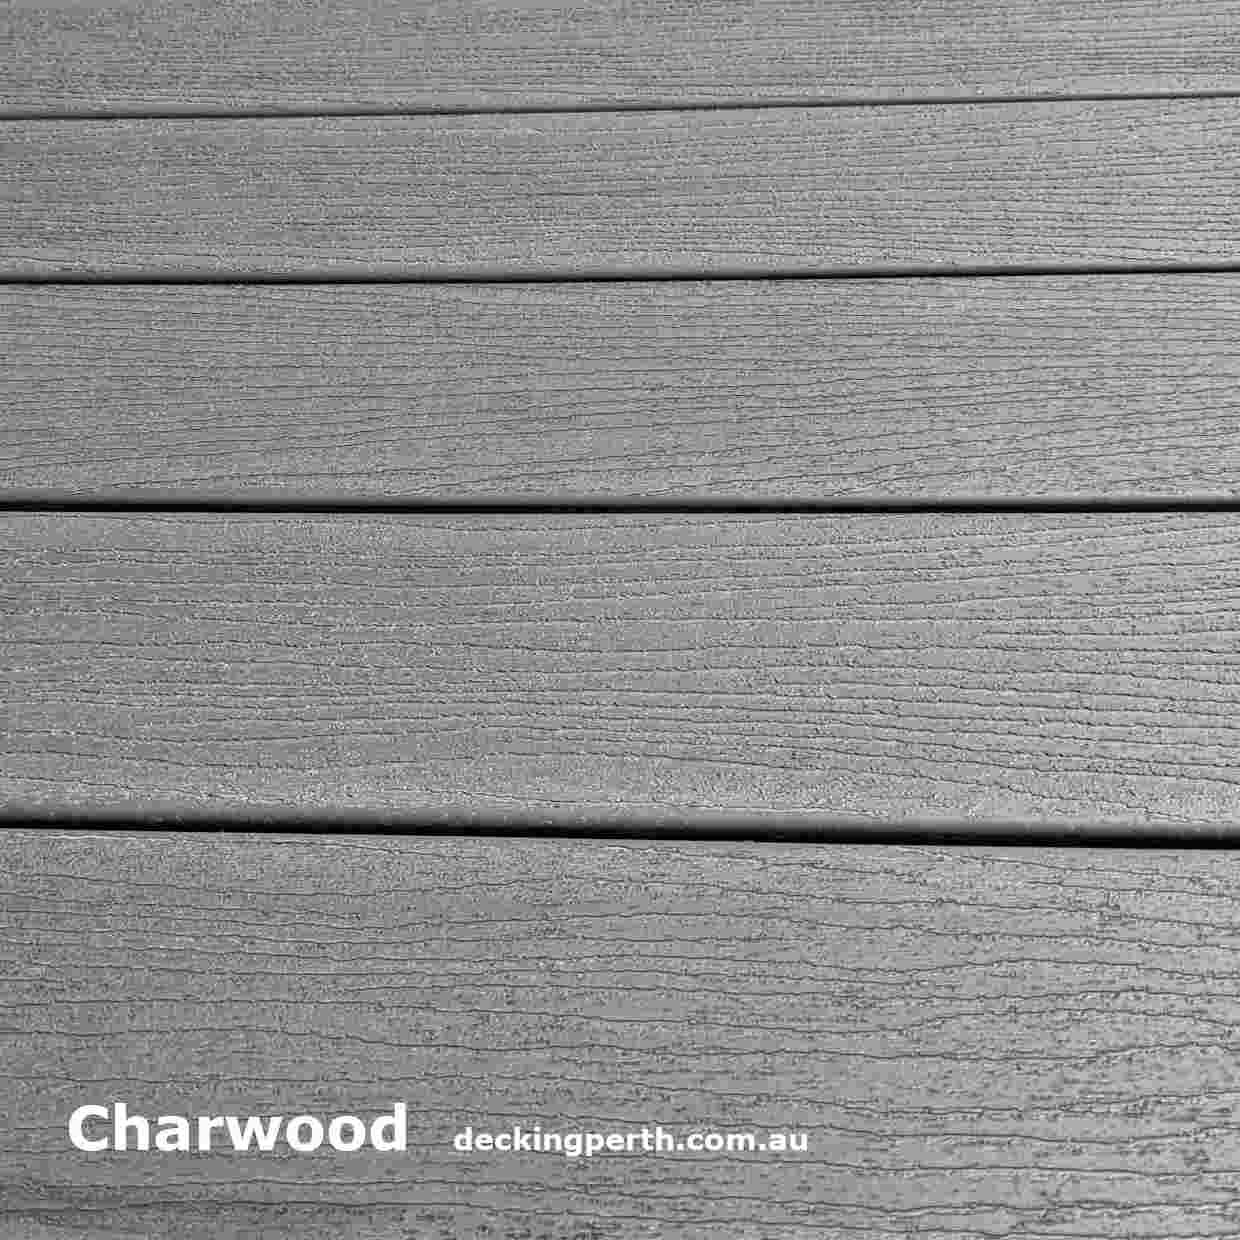 Charwood_decking_perth